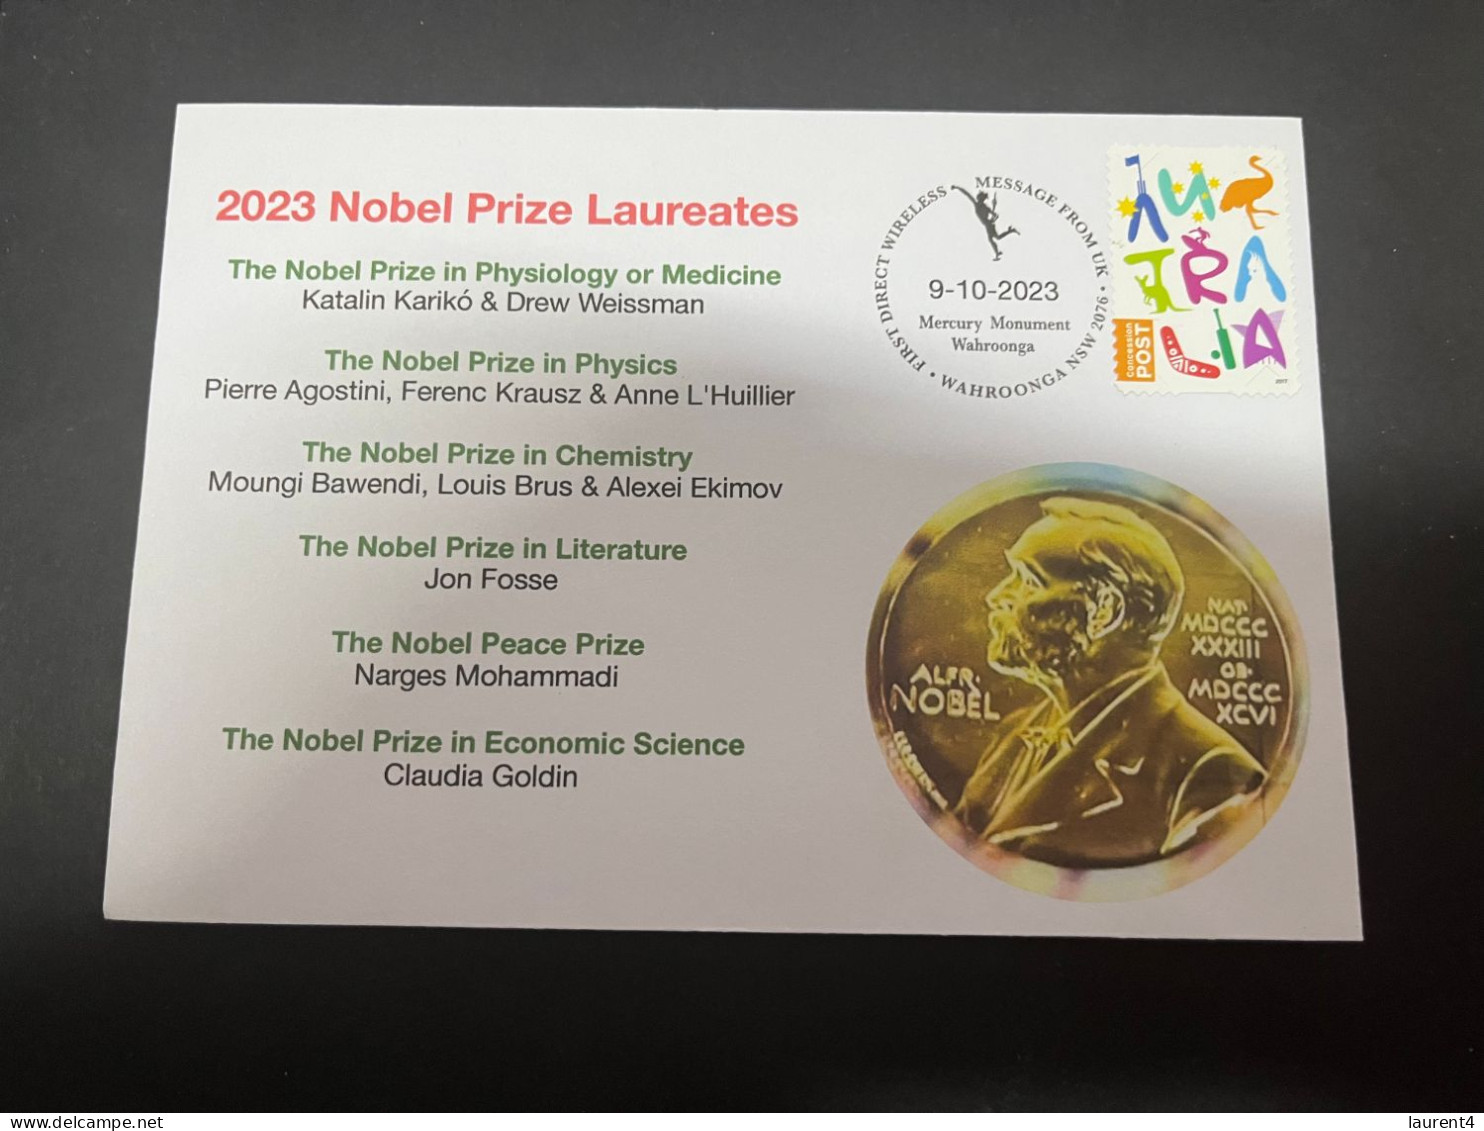 4-5-2024 (4 Z 7) 2023 Nobel Prizes Laureates (1 Cover) 7 Laureates Prizes - Nobel Prize Laureates